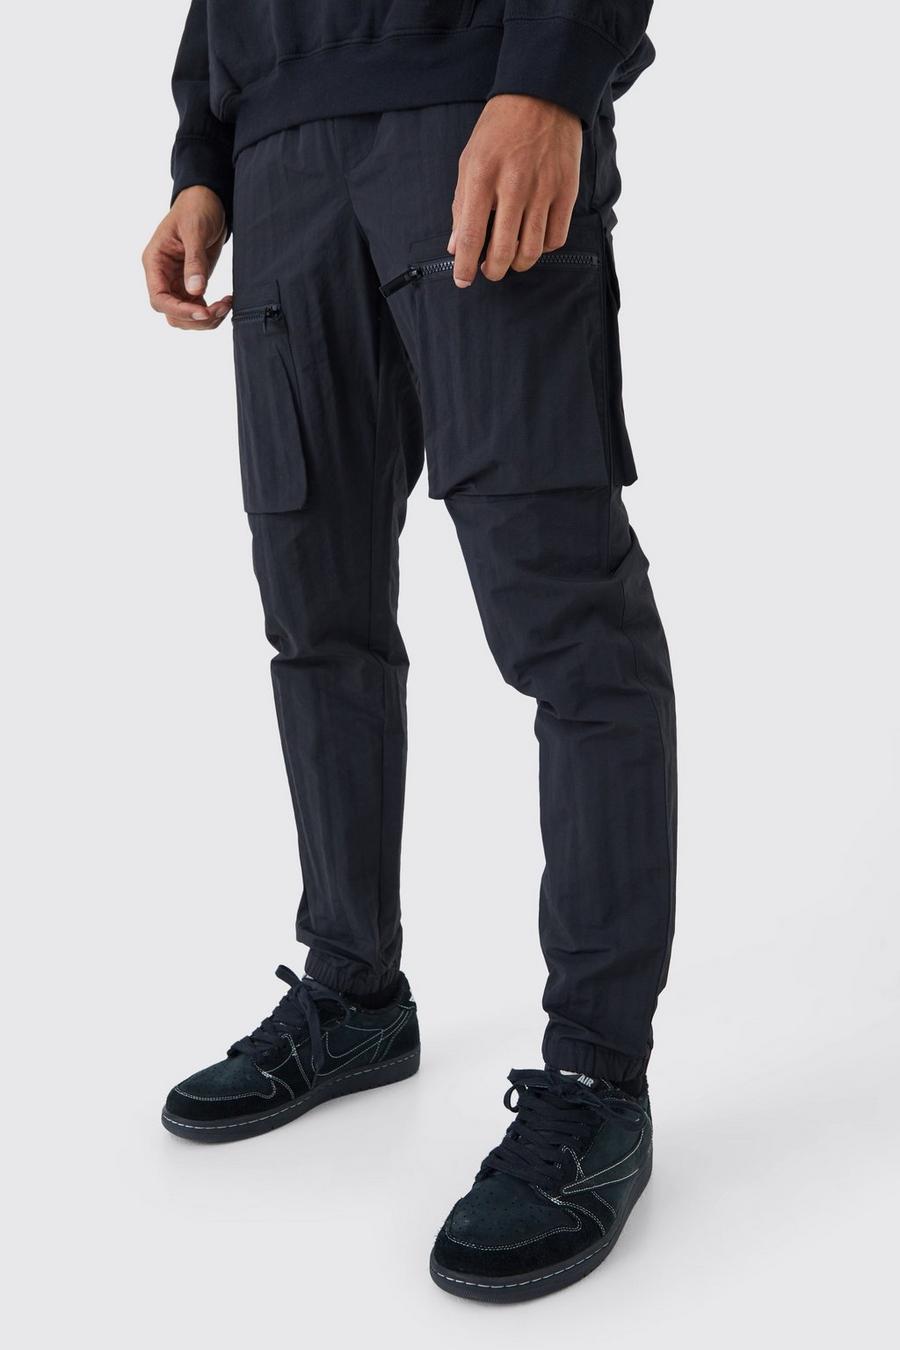 Black Elastic Waist Slim Fit Crinkle Nylon Cargo Pants